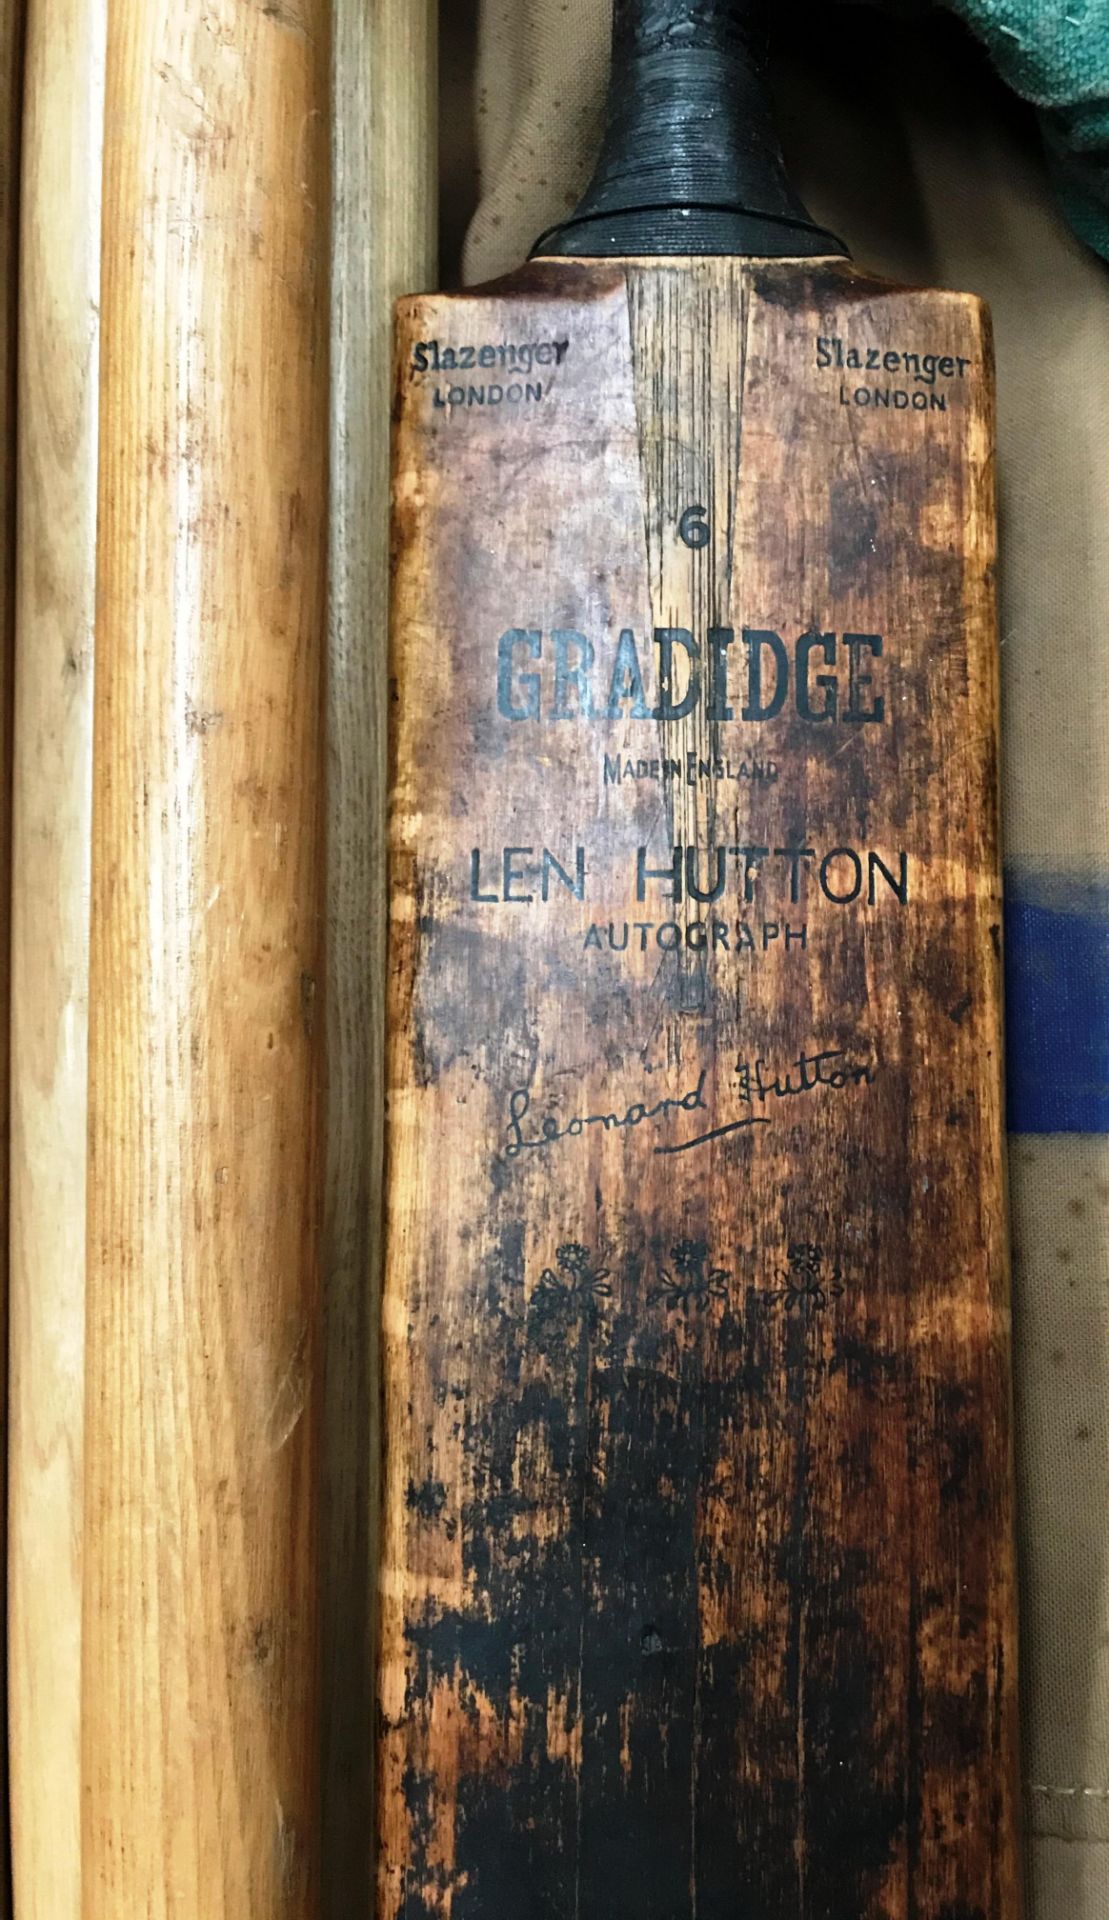 A kit bag containing a Slazenger Gradidge 'Len Hutton' child's cricket bat, six cricket stumps, - Image 2 of 2